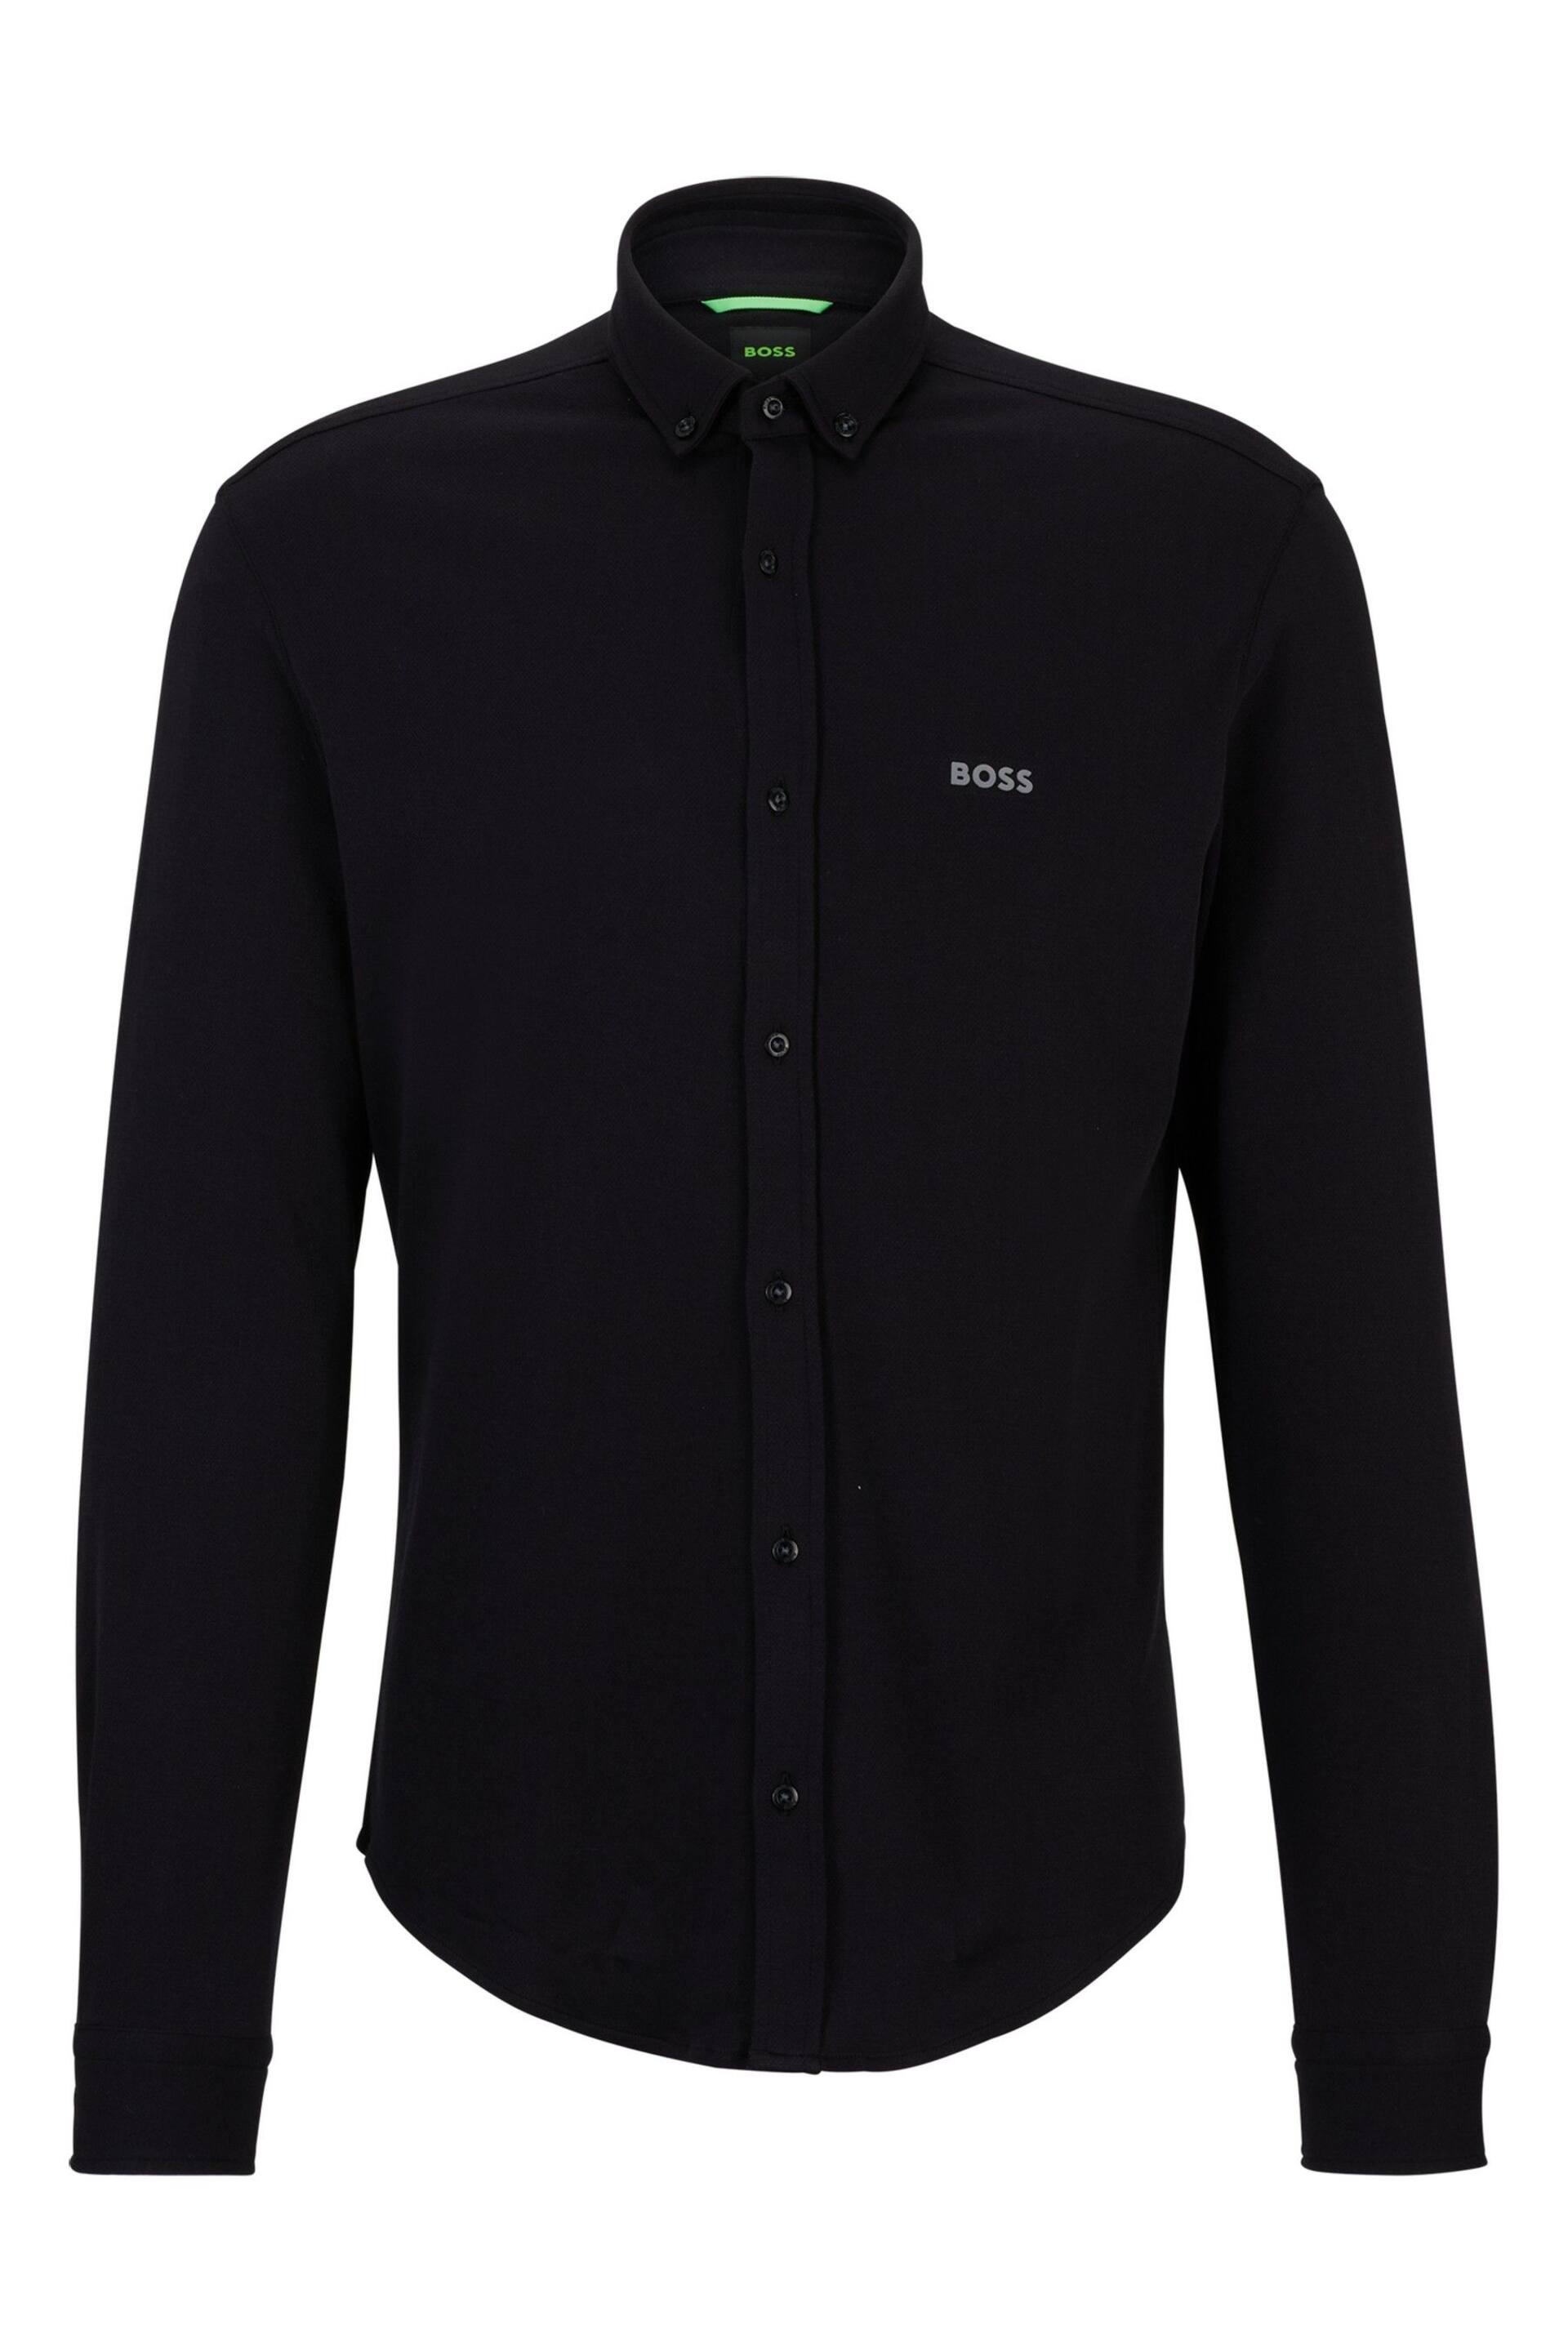 BOSS Black Cotton Pique Regular Fit Shirt - Image 6 of 6